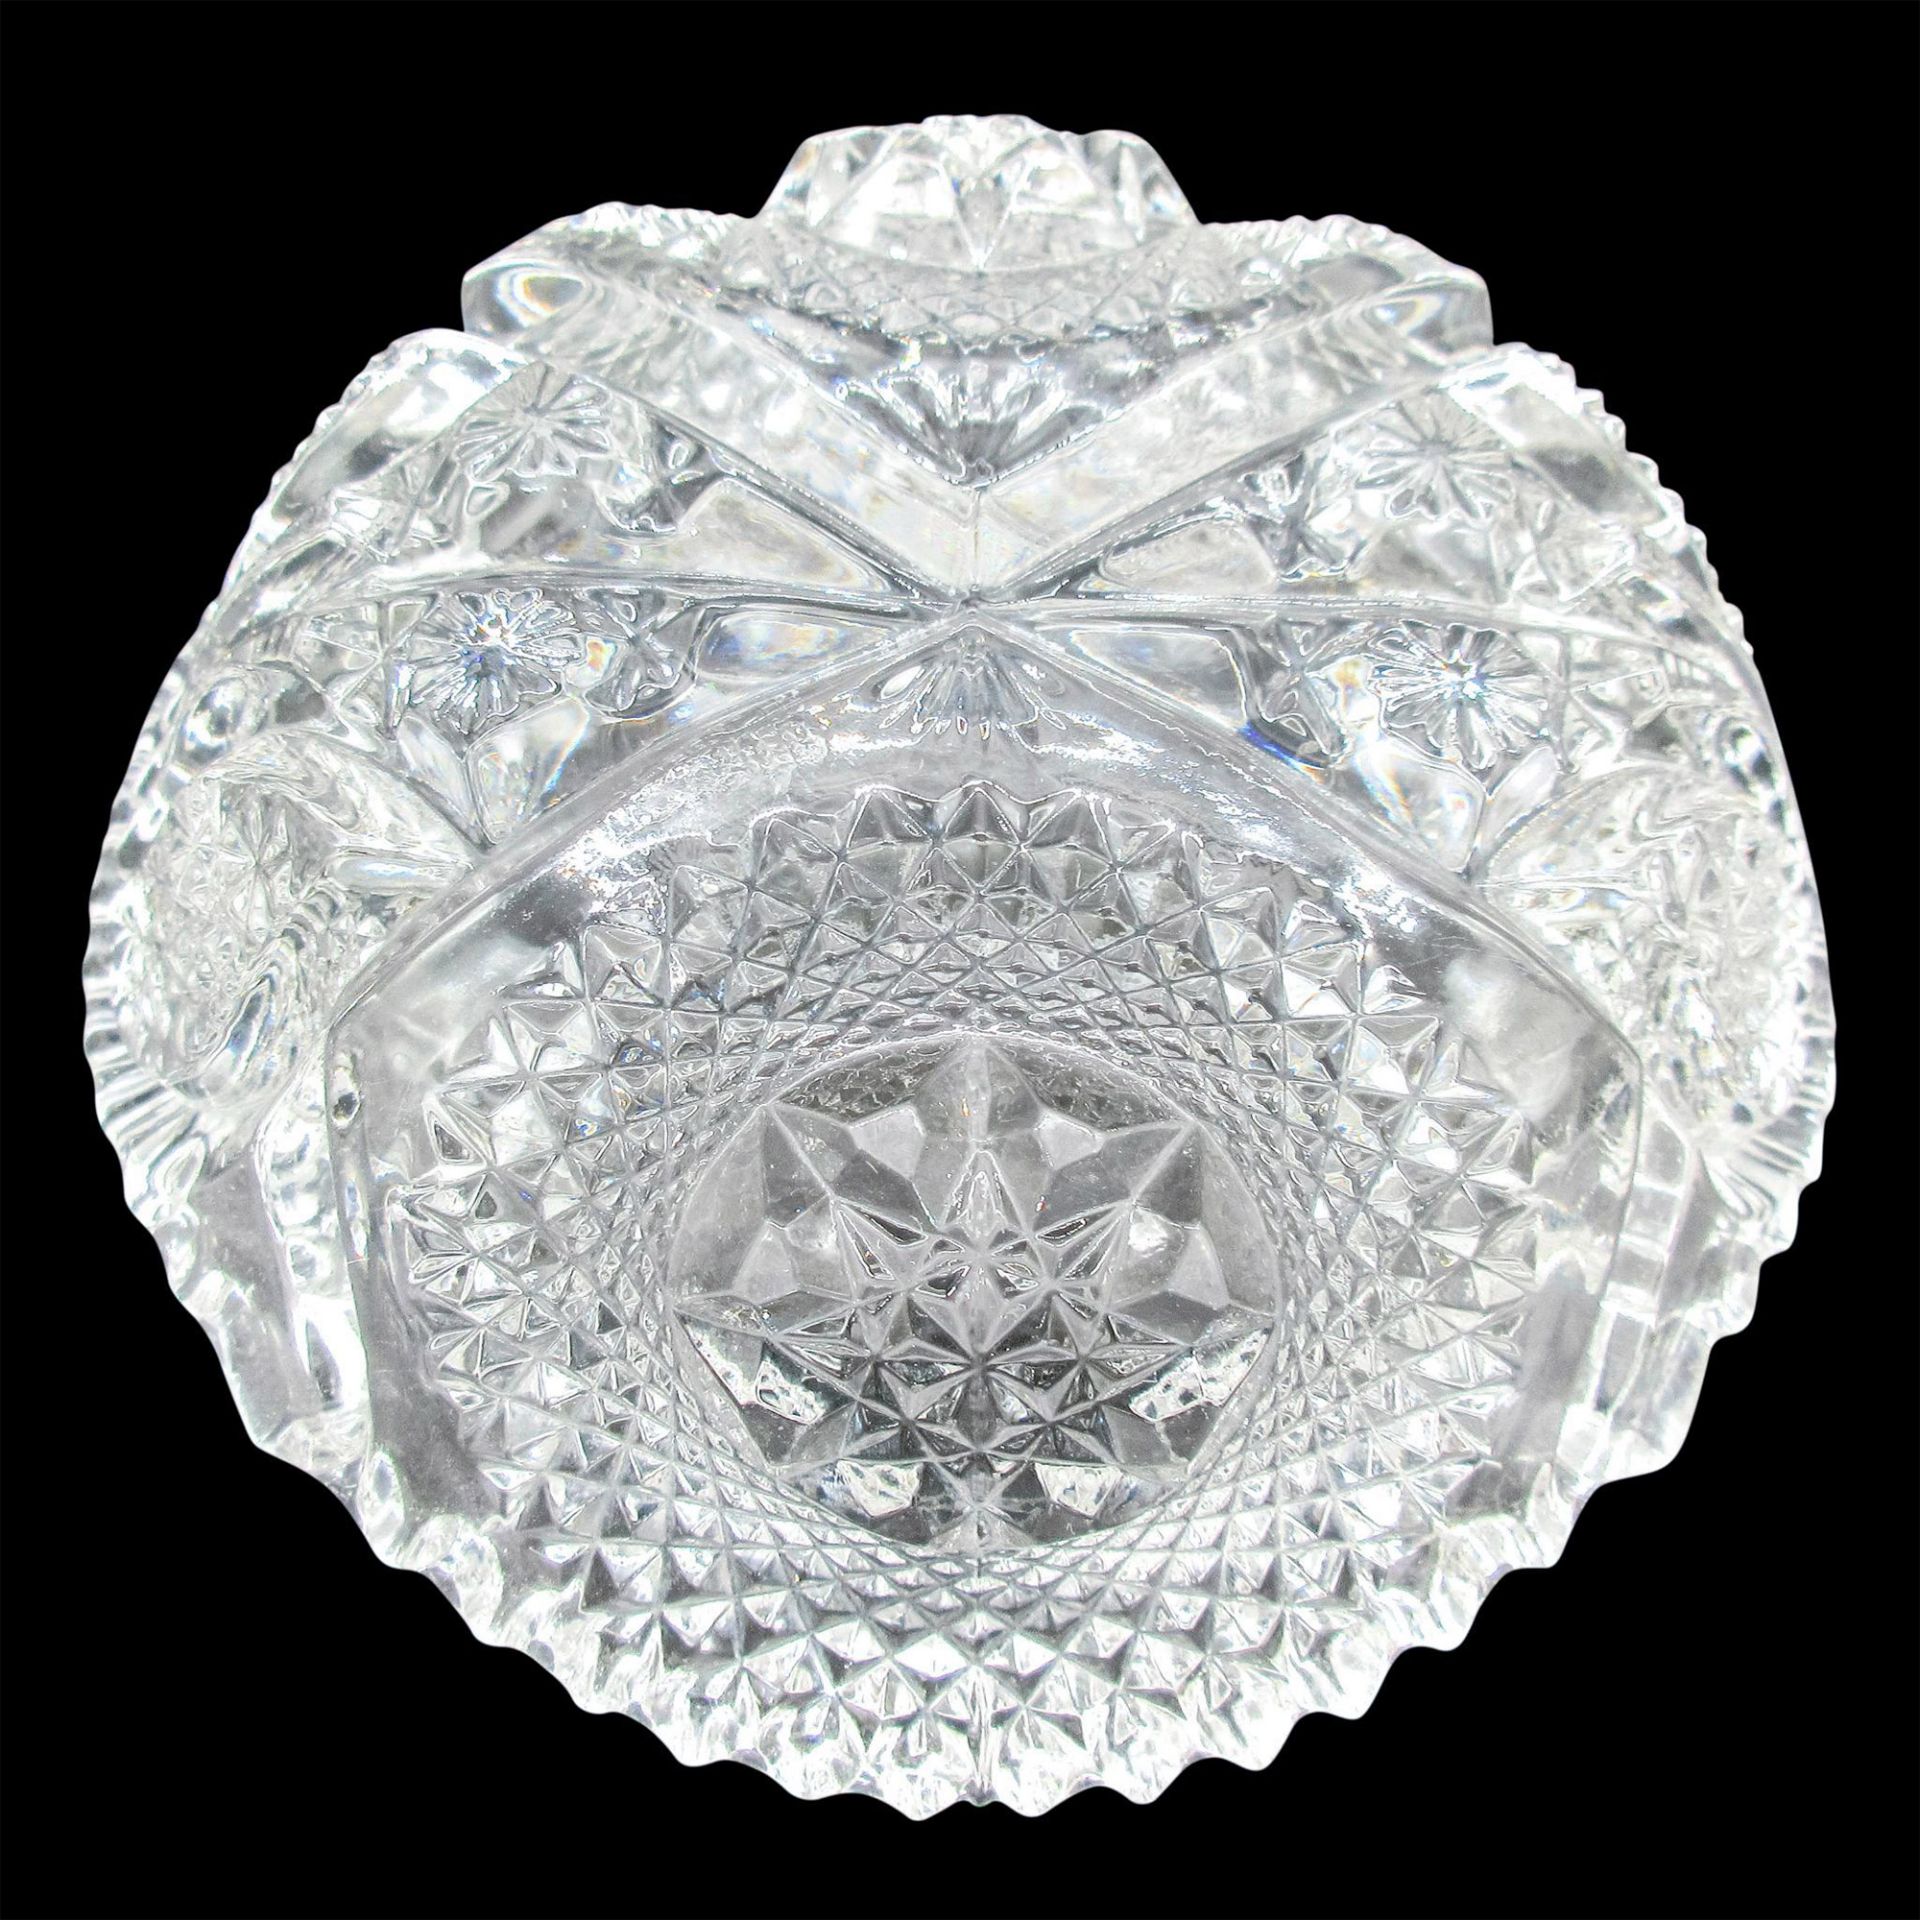 4pc Decorative Glass Fruit Bowls - Image 5 of 10